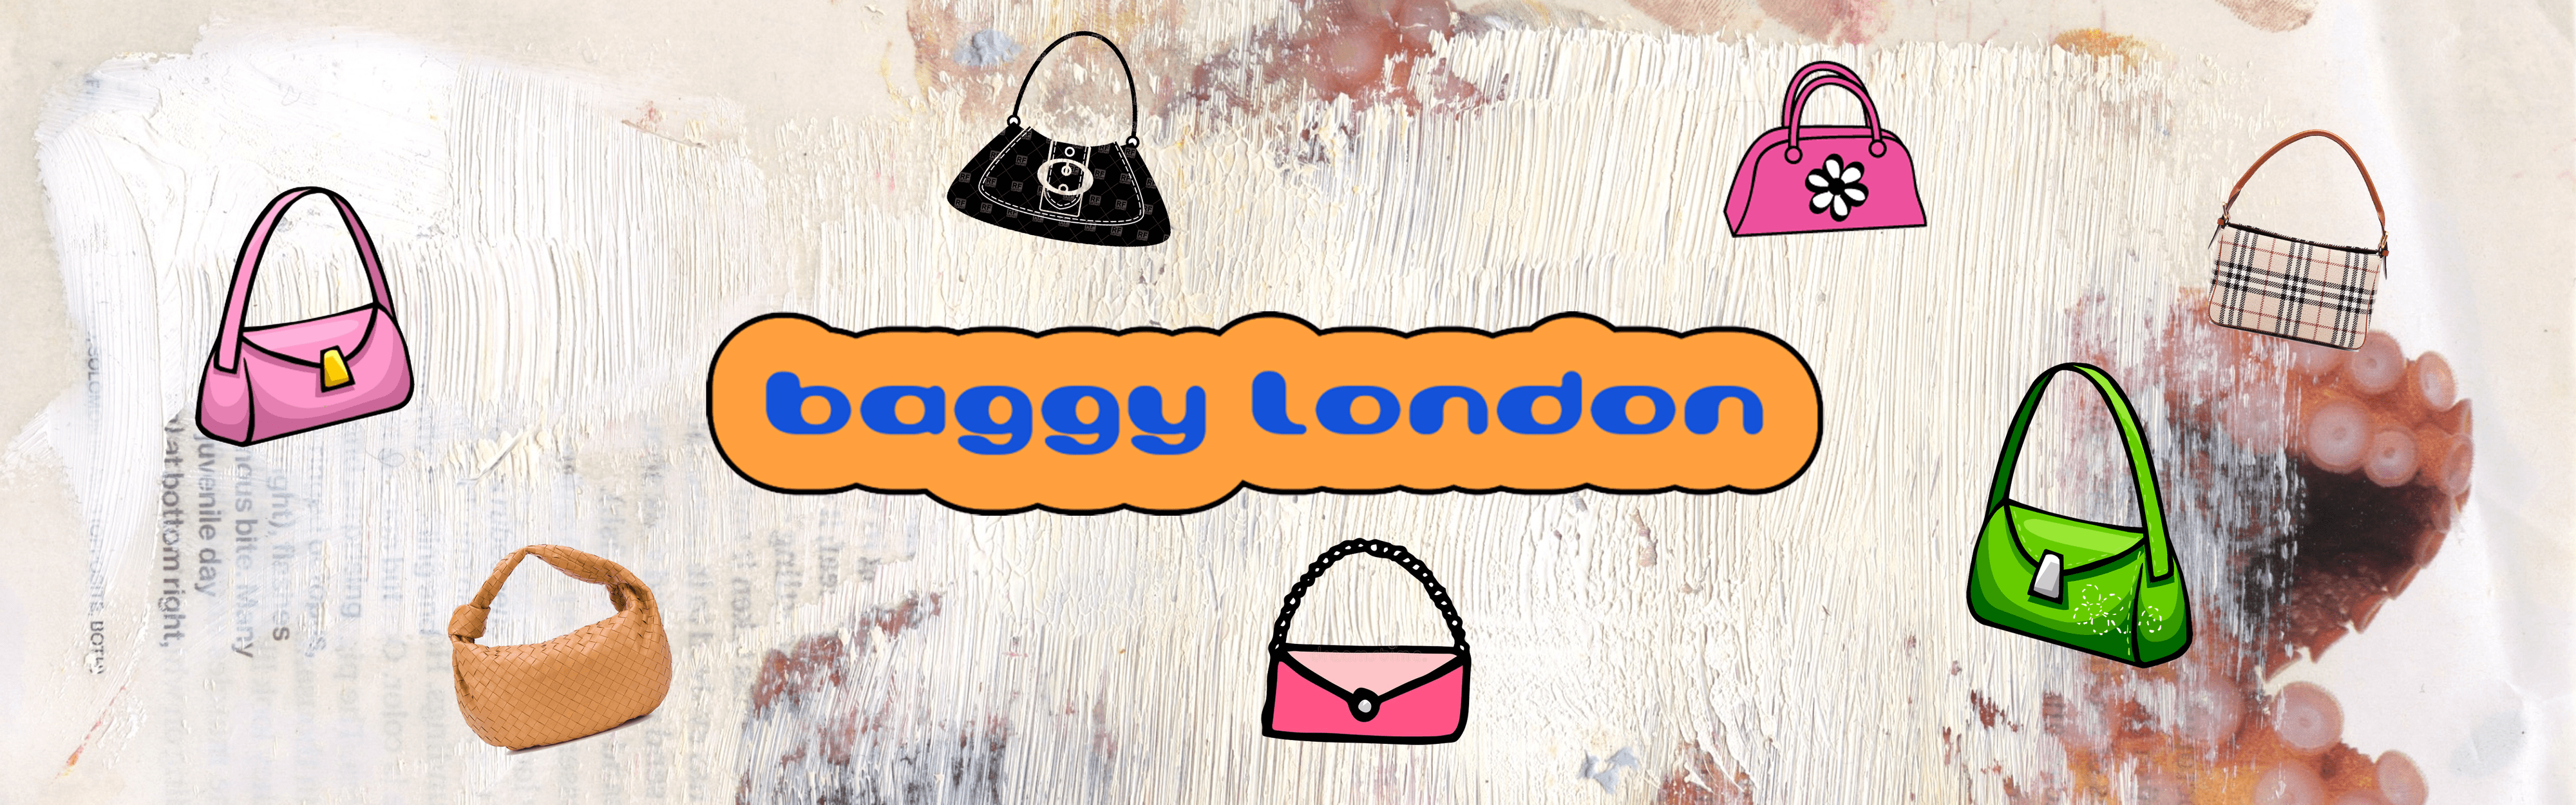 Baggy_london banner